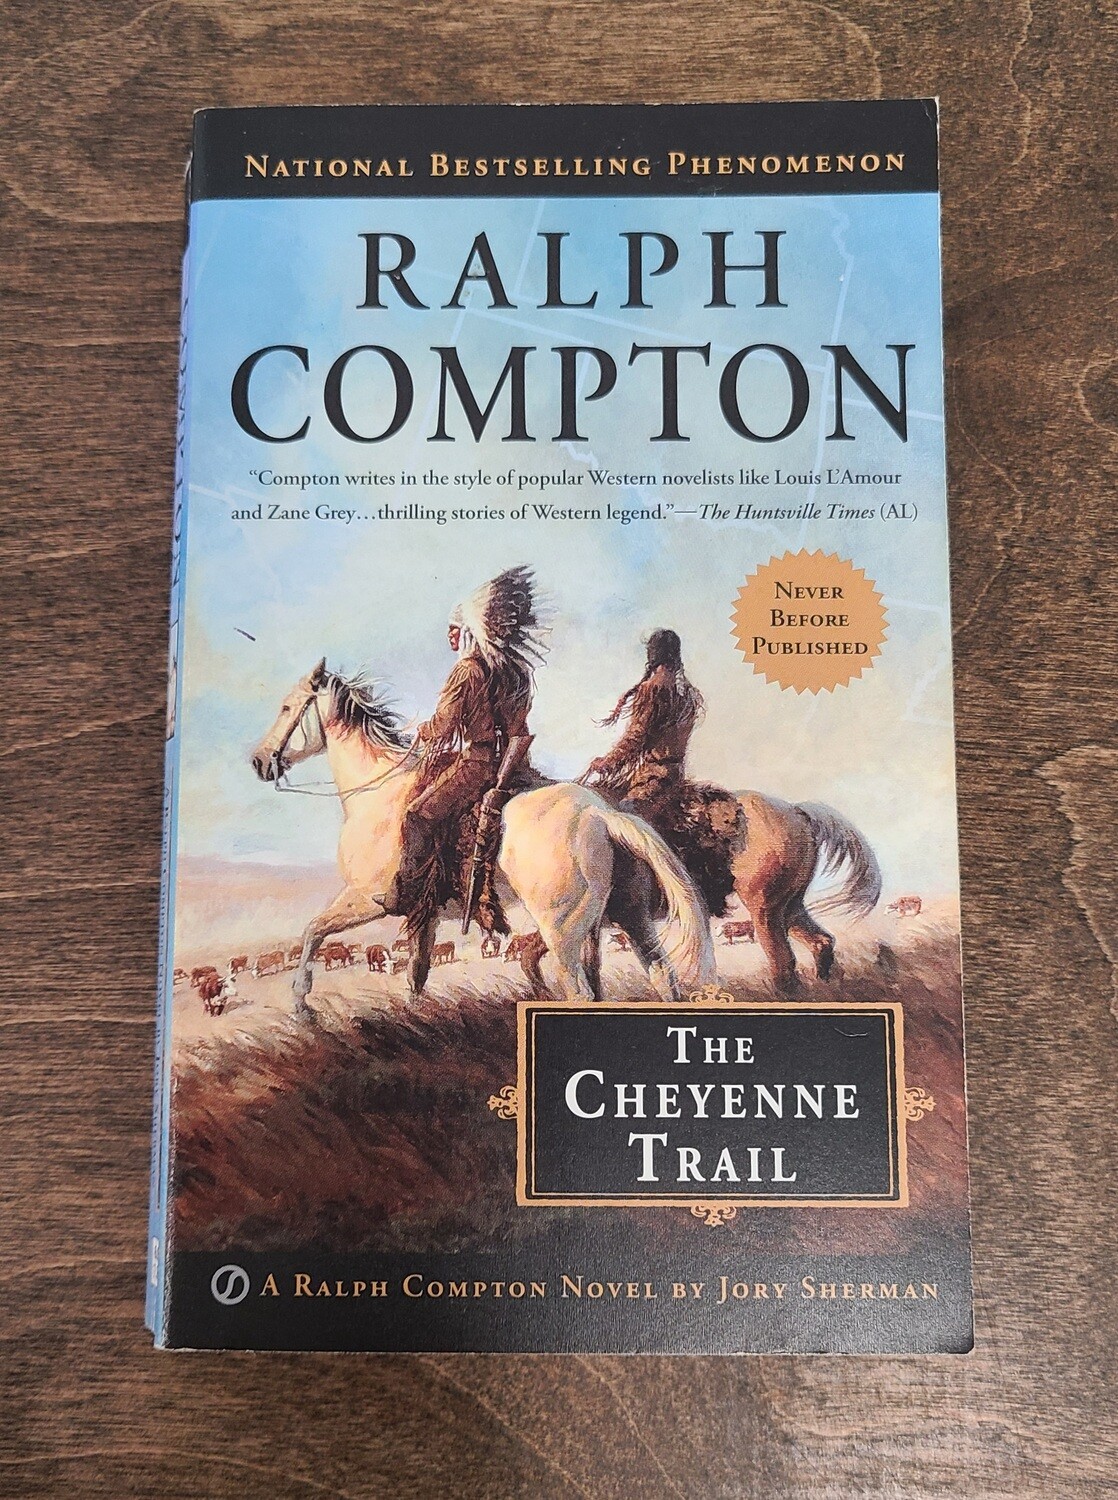 The Cheyenne Trail by Ralph Compton